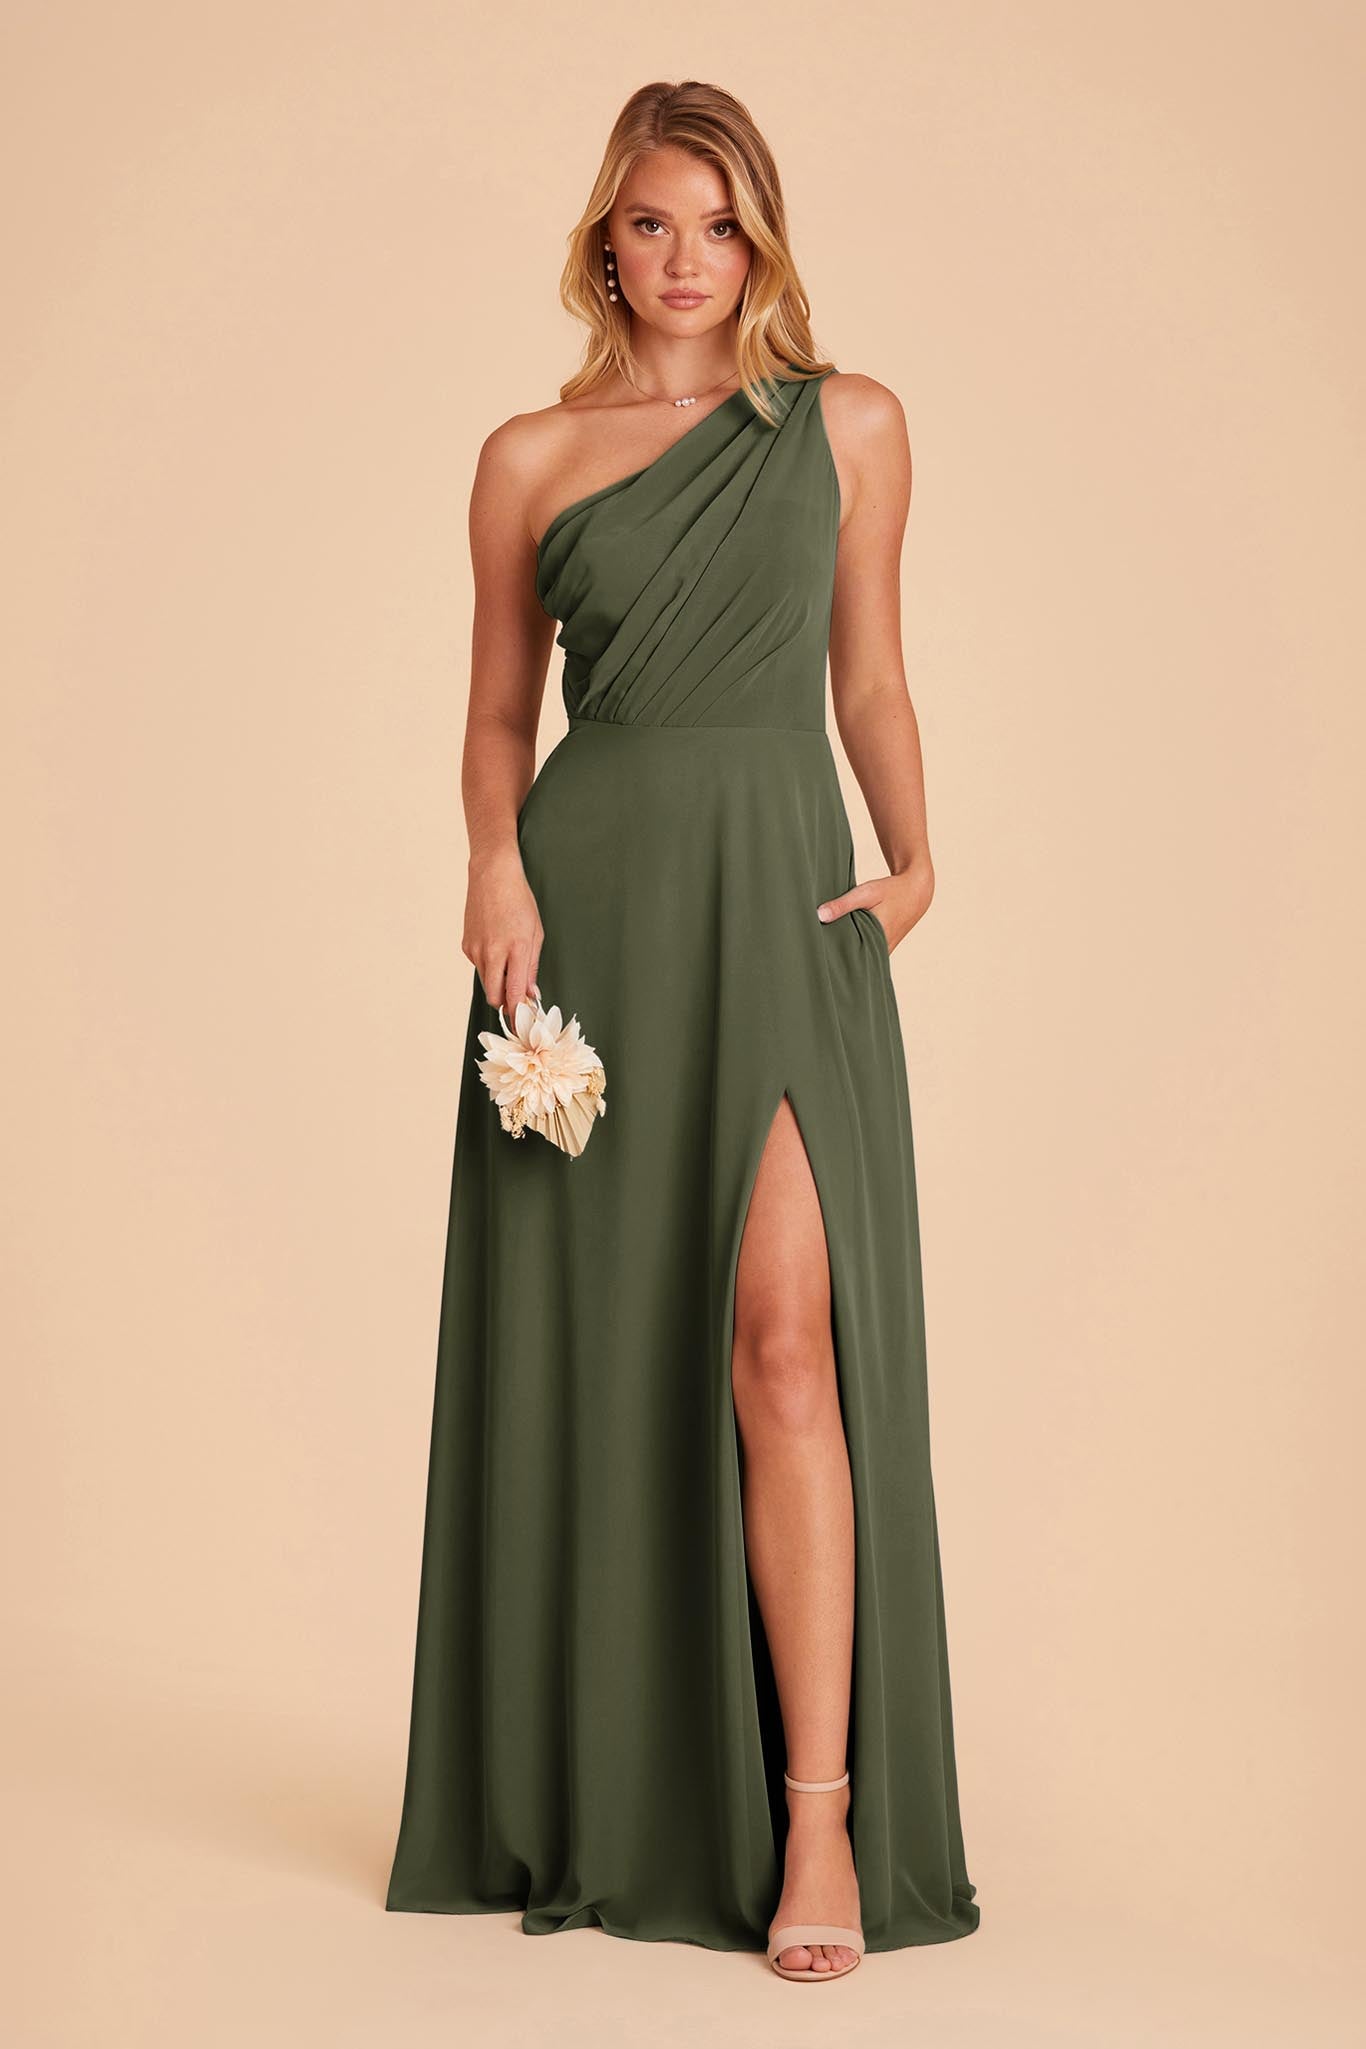 B. Darlin Womens Satin Strappy Formal Evening Dress Gown Juniors BHFO 9873  | eBay